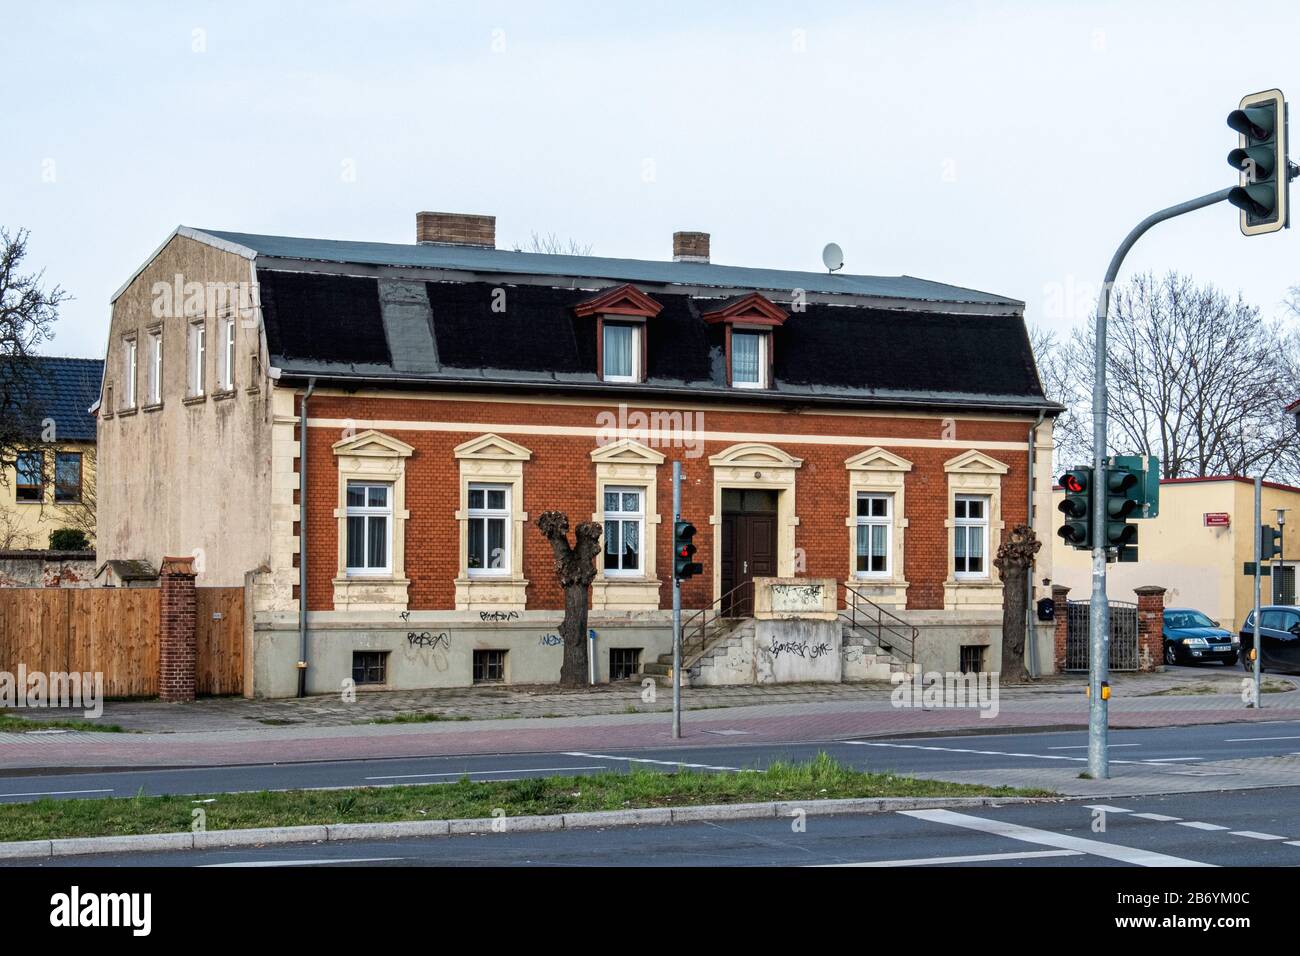 Traditional old building with gabled windows & brick facade in Berliner str.,Hönow, Hoppegarten, Brandenburg, Germany Stock Photo